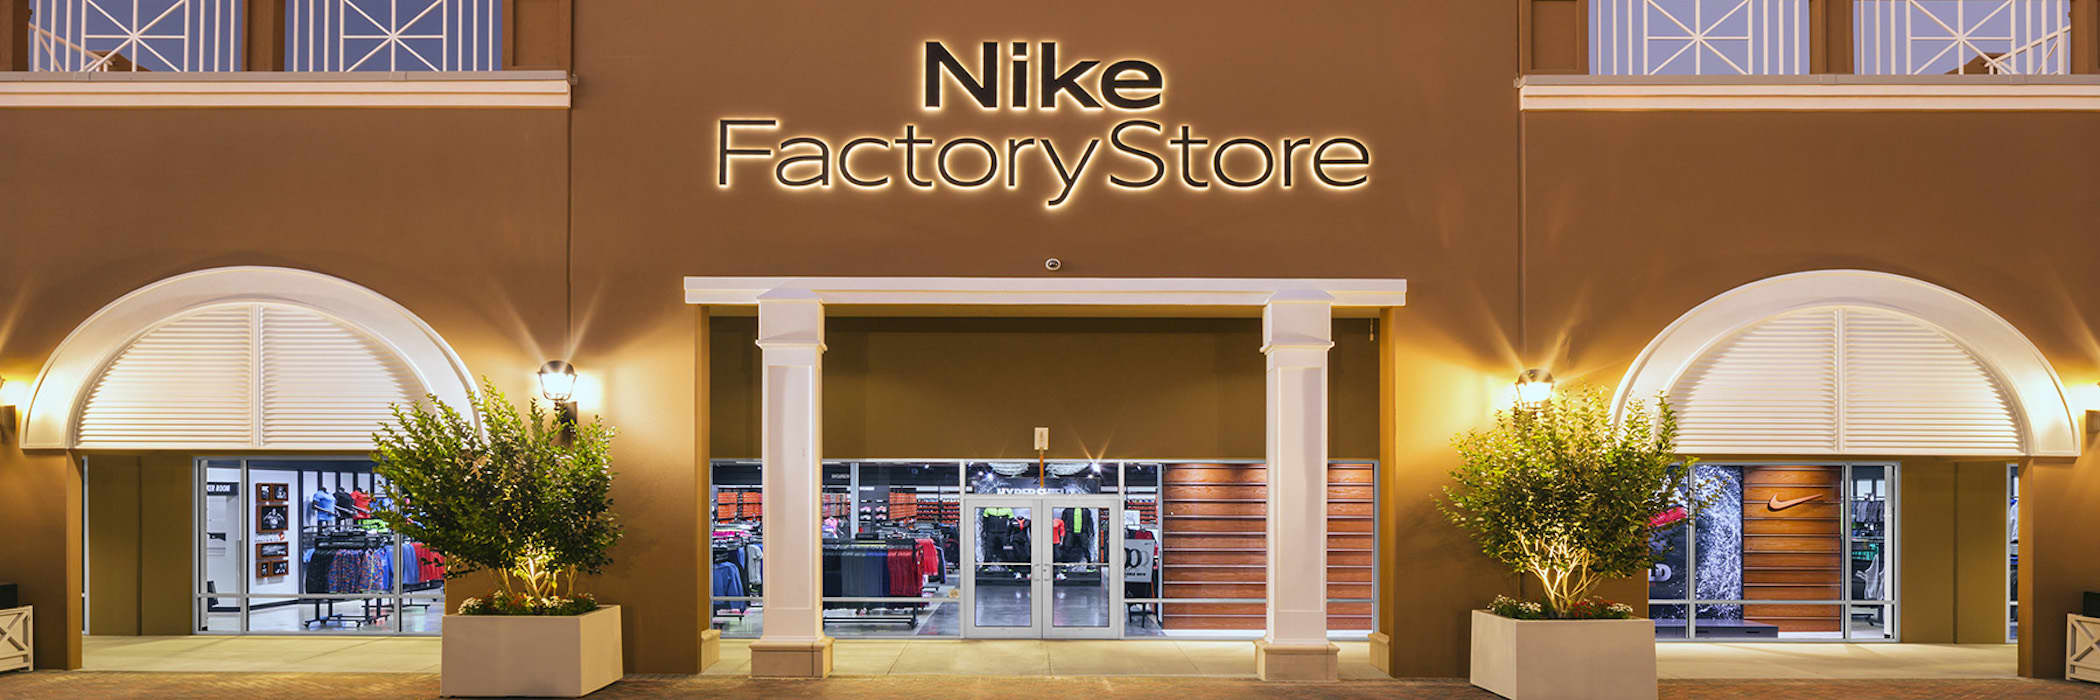 Nike Factory Store - Pearl. Pearl, MS.